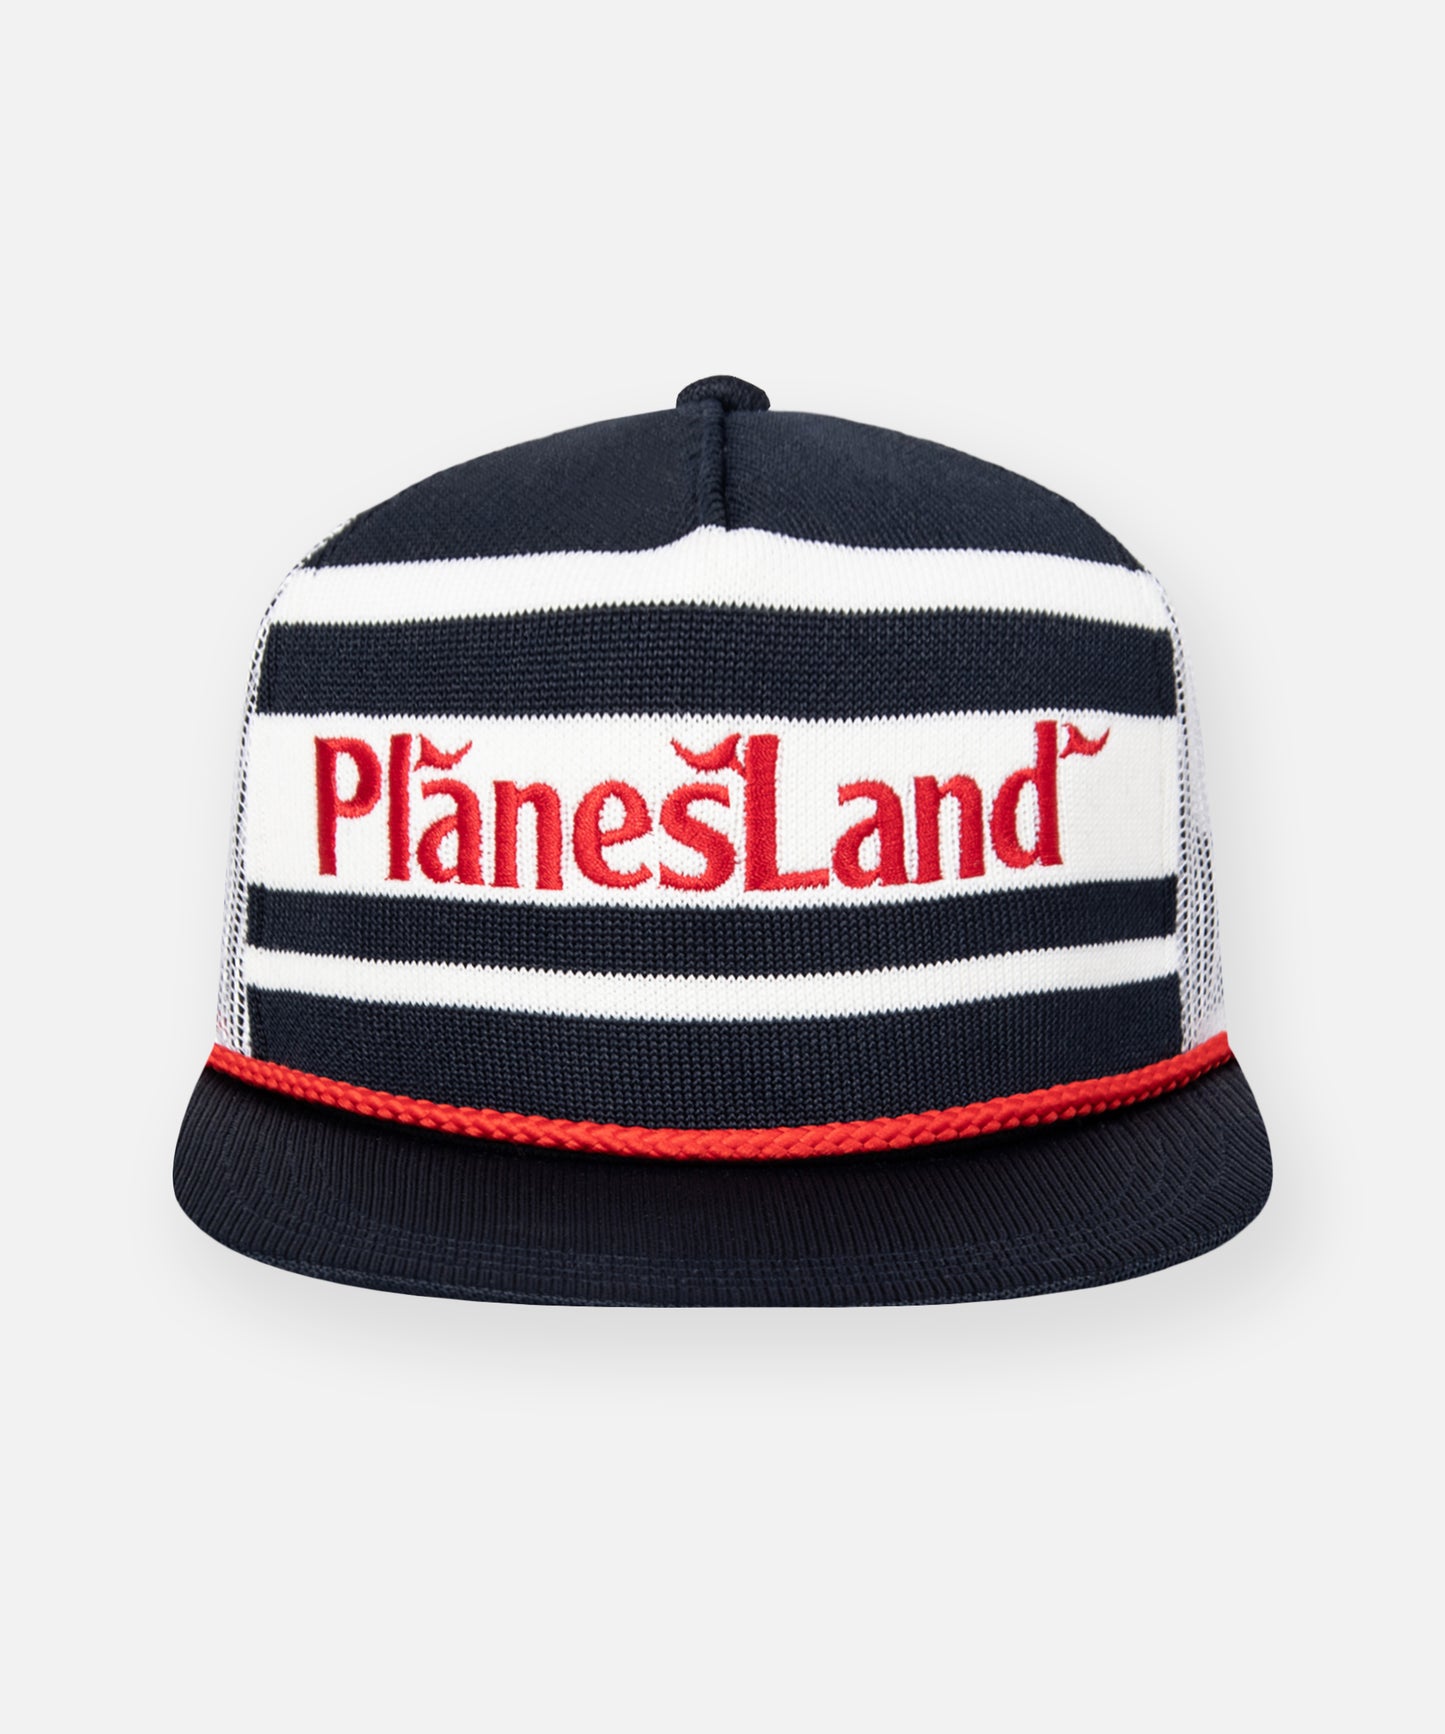 PlanesLand Knit Stripes Trucker Hat